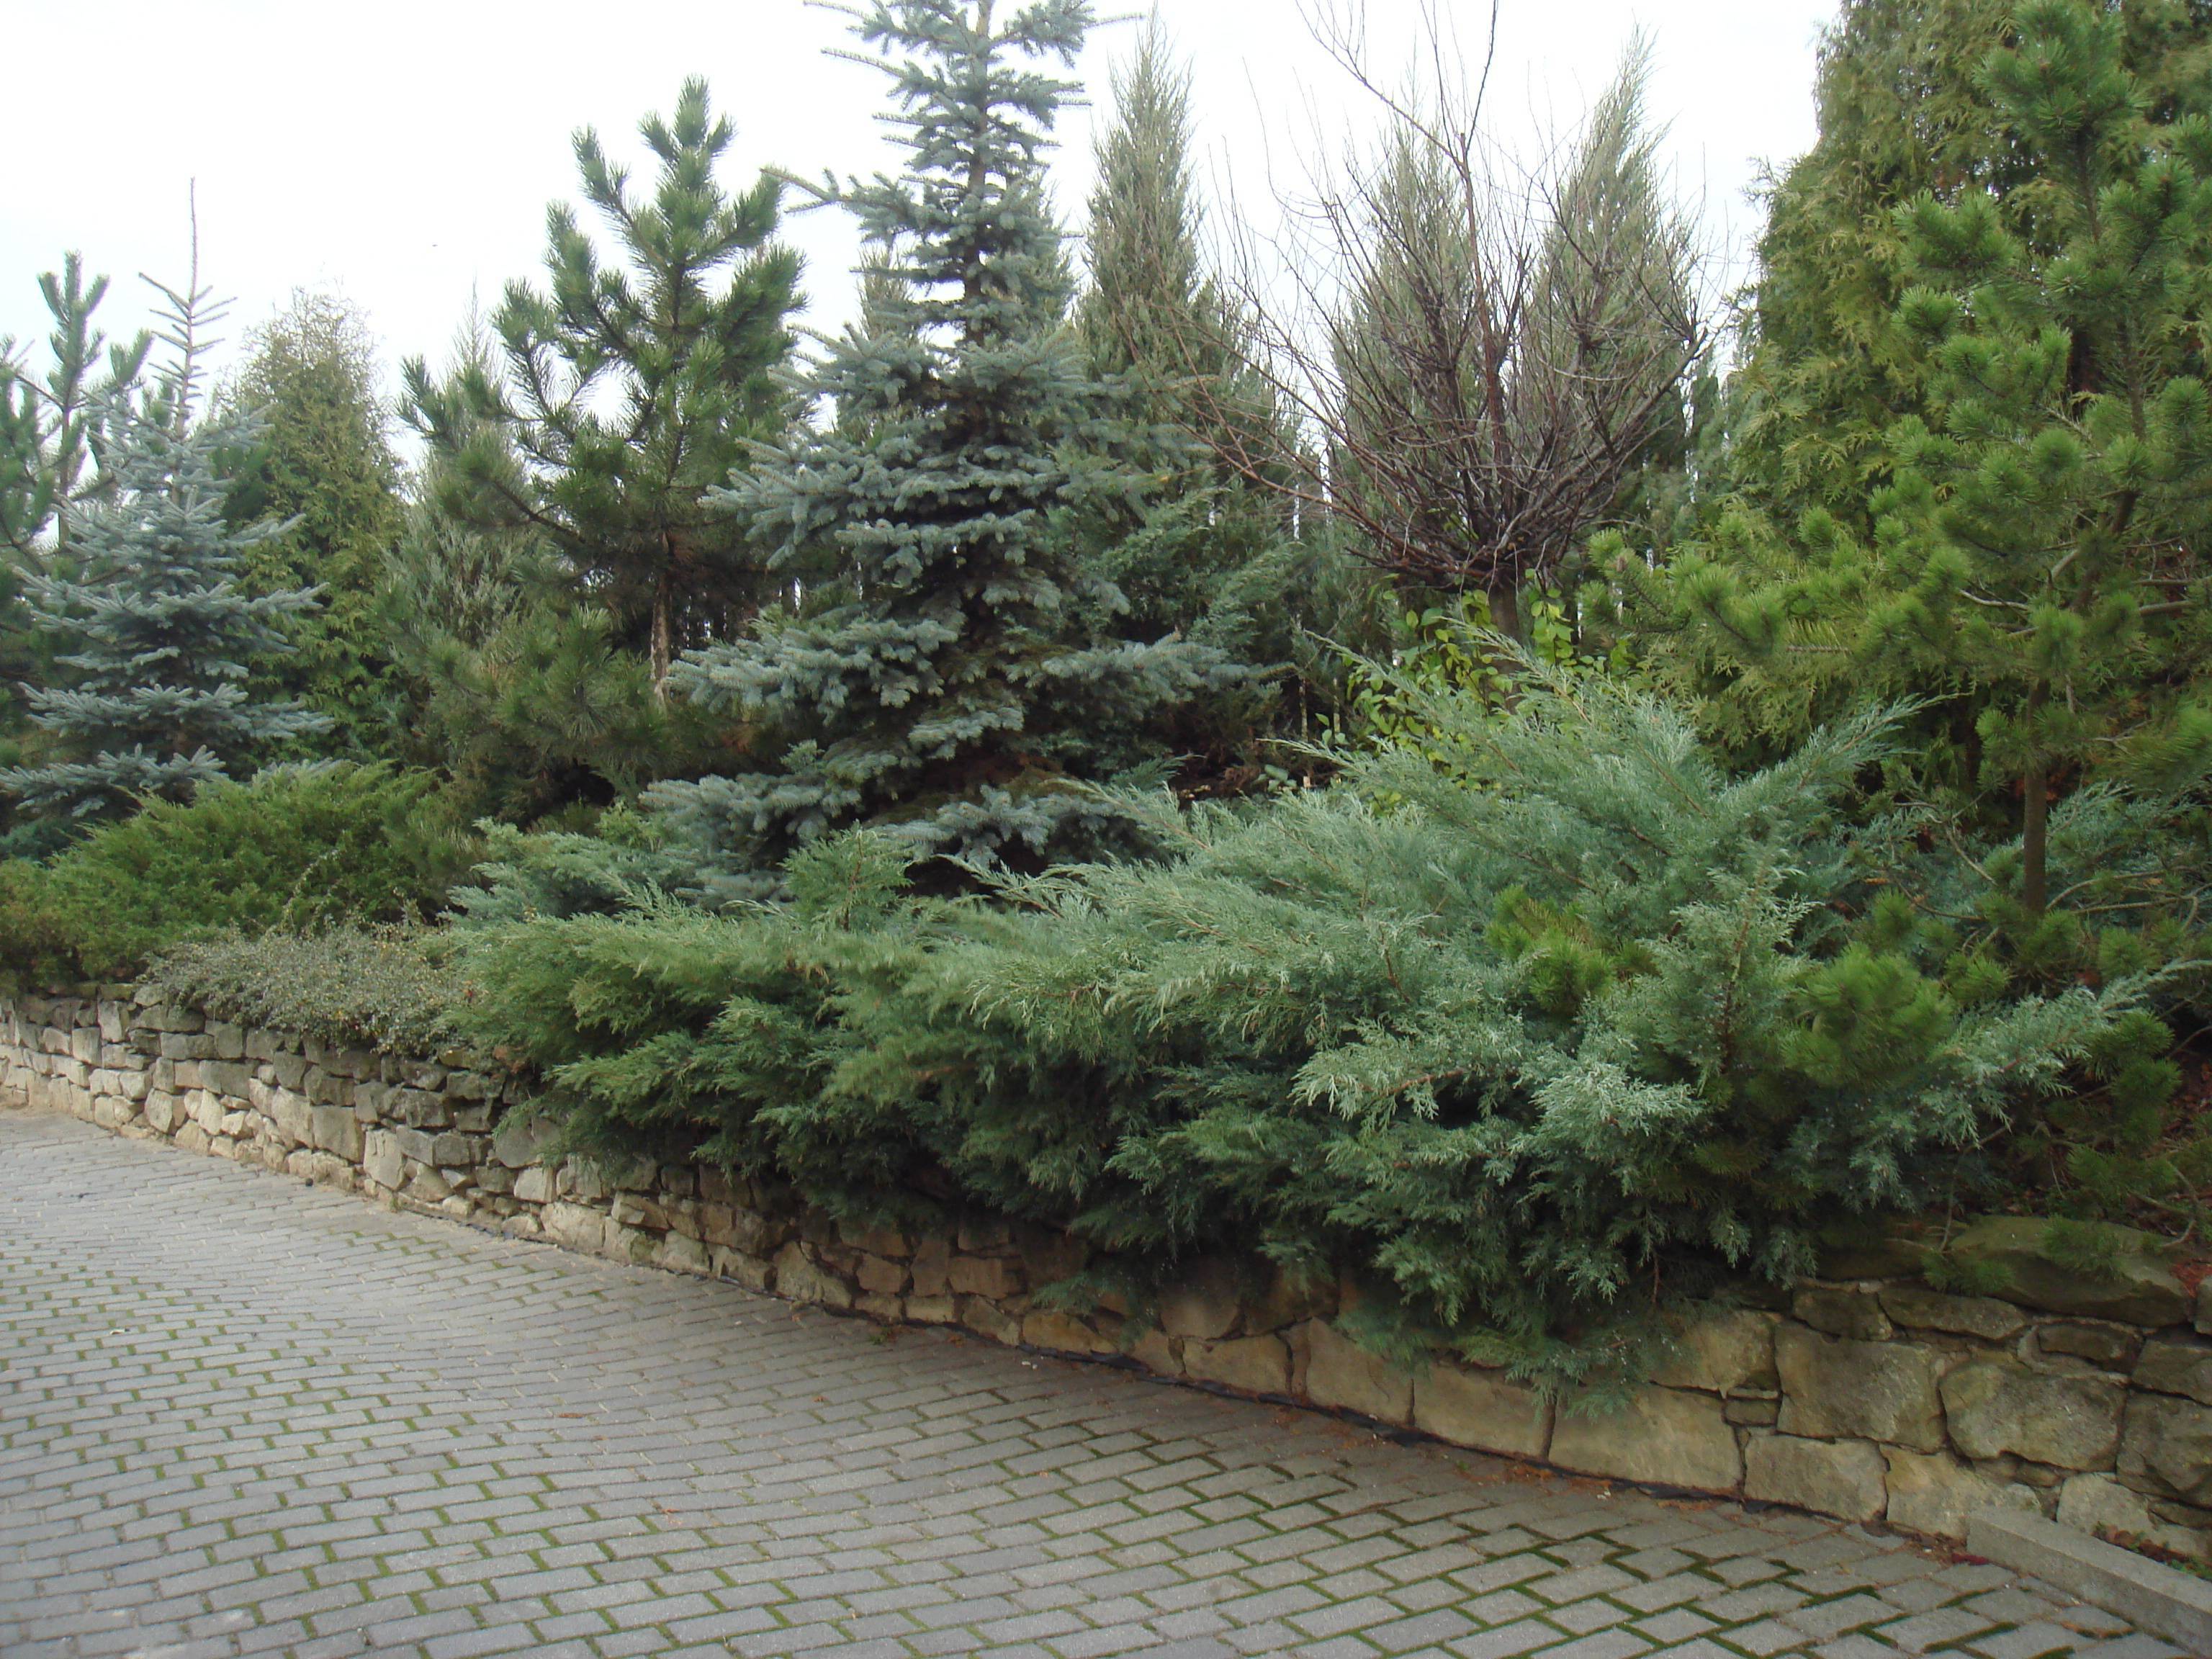 Можжевельник виргинский (juniperus virginiana)